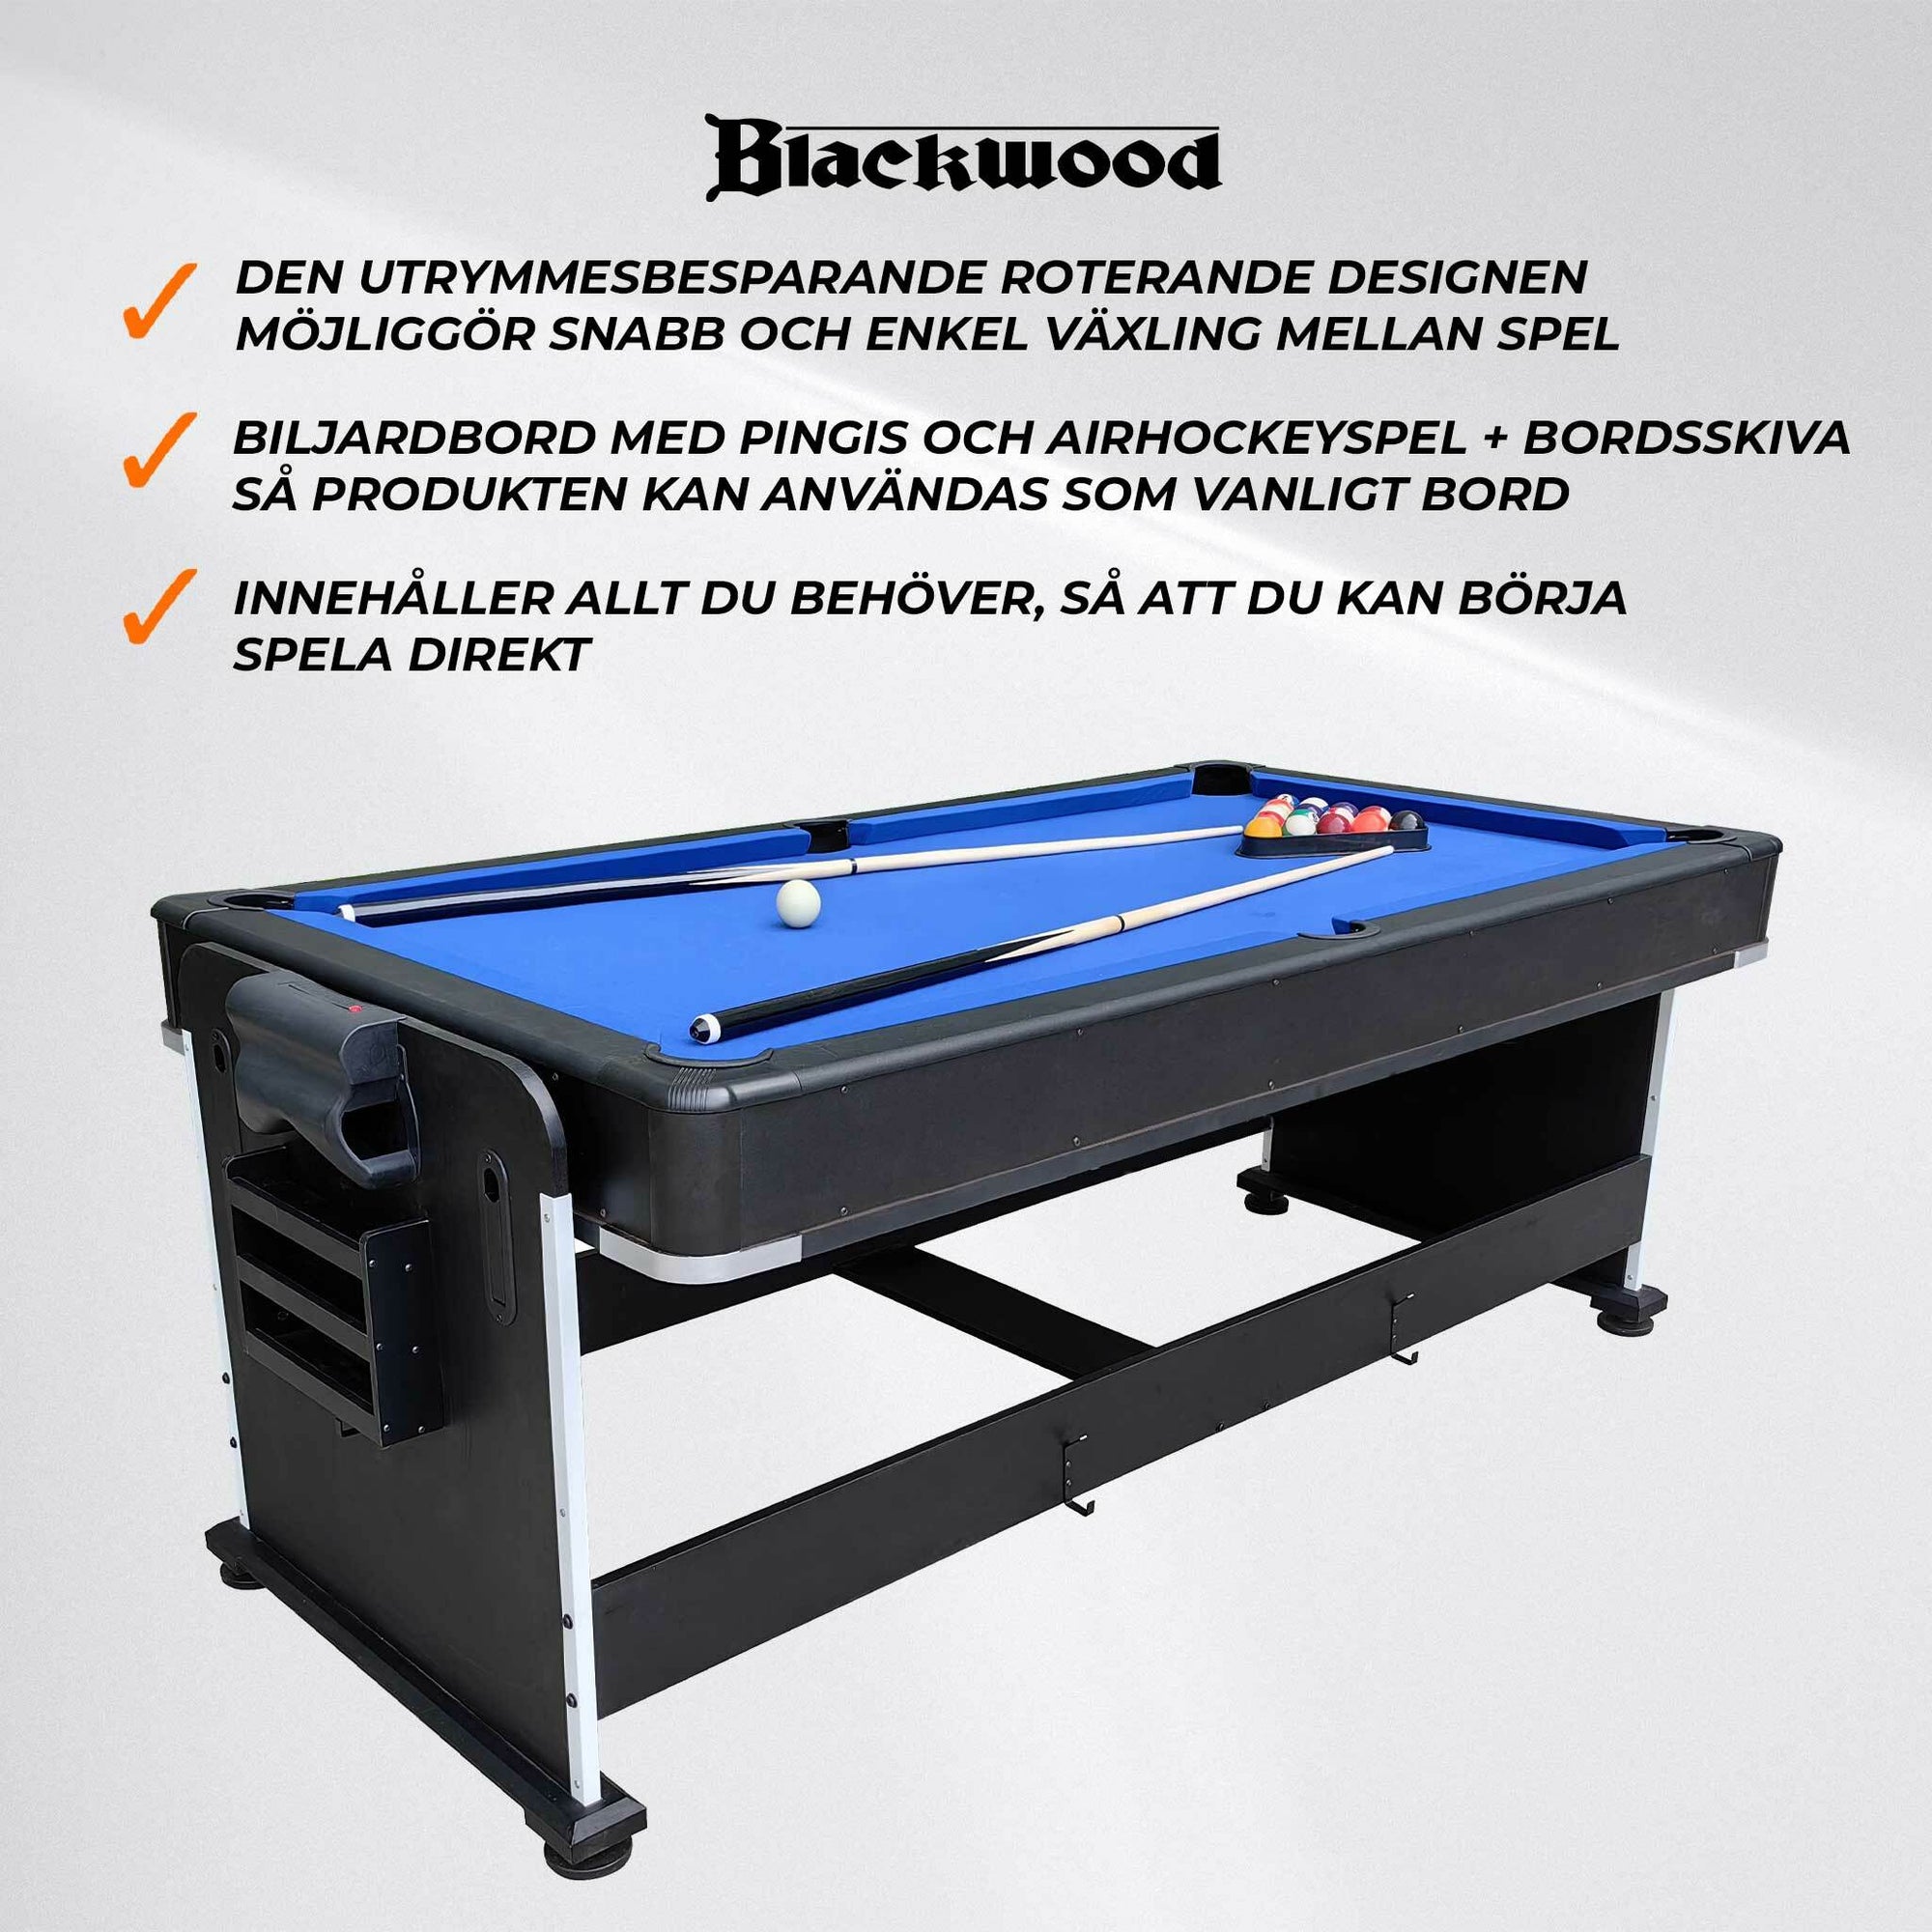 Blackwood Biljardbord 7' 4-IN-1